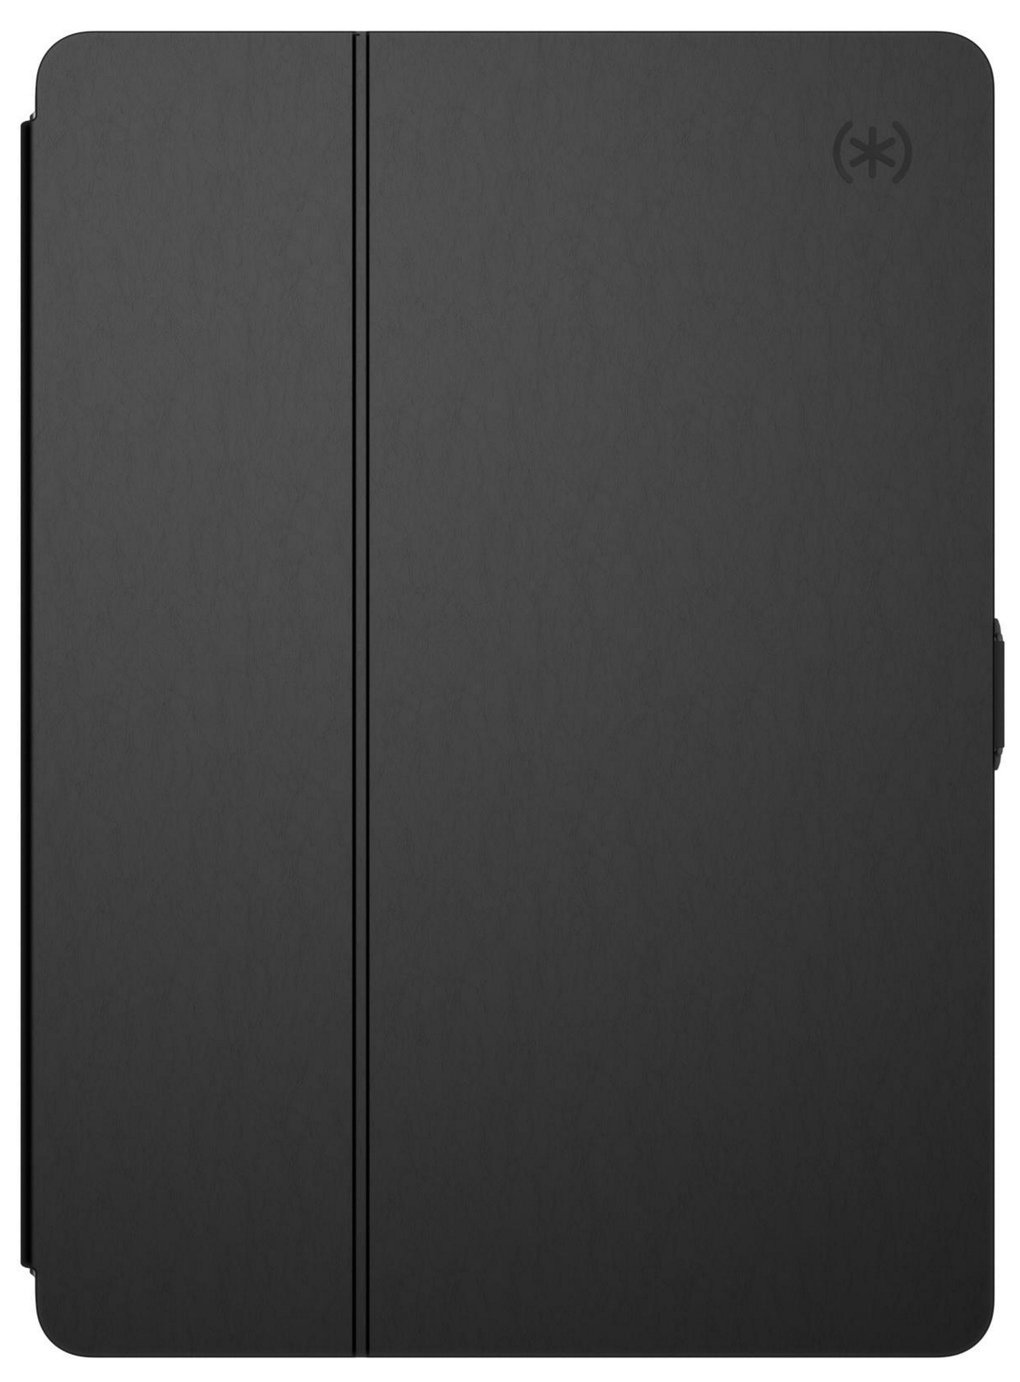 Speck Balance 10.5 Inch iPad Pro Tablet Case - Black